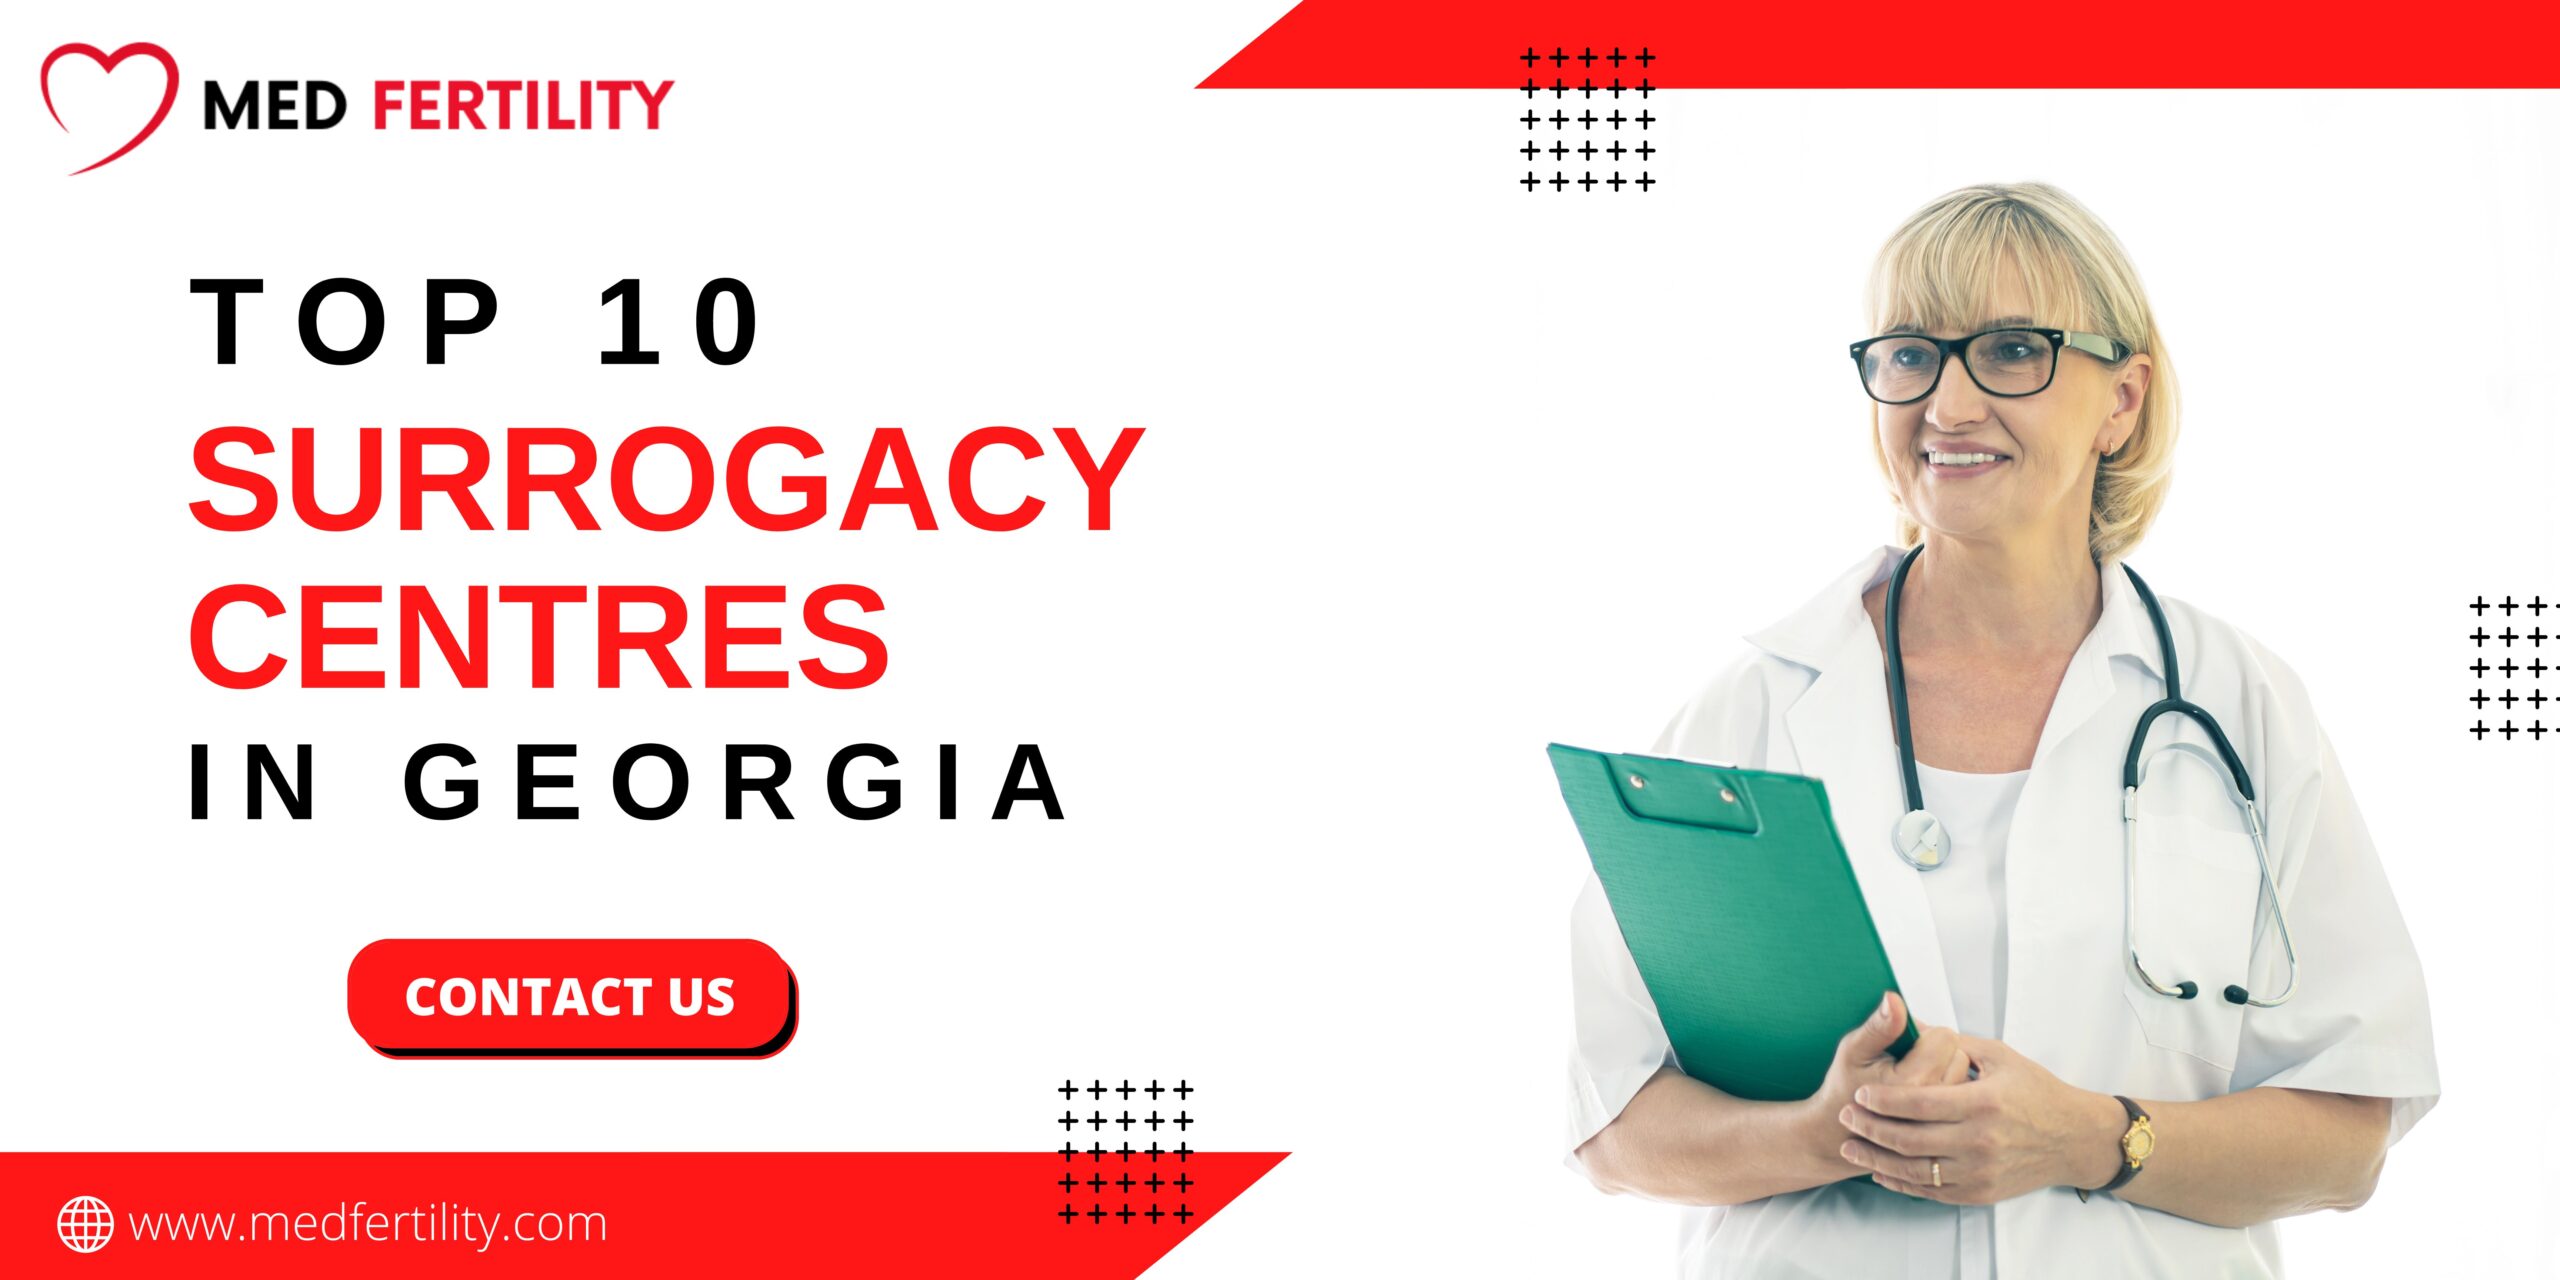 Top 10 Surrogacy Centres in Georgia